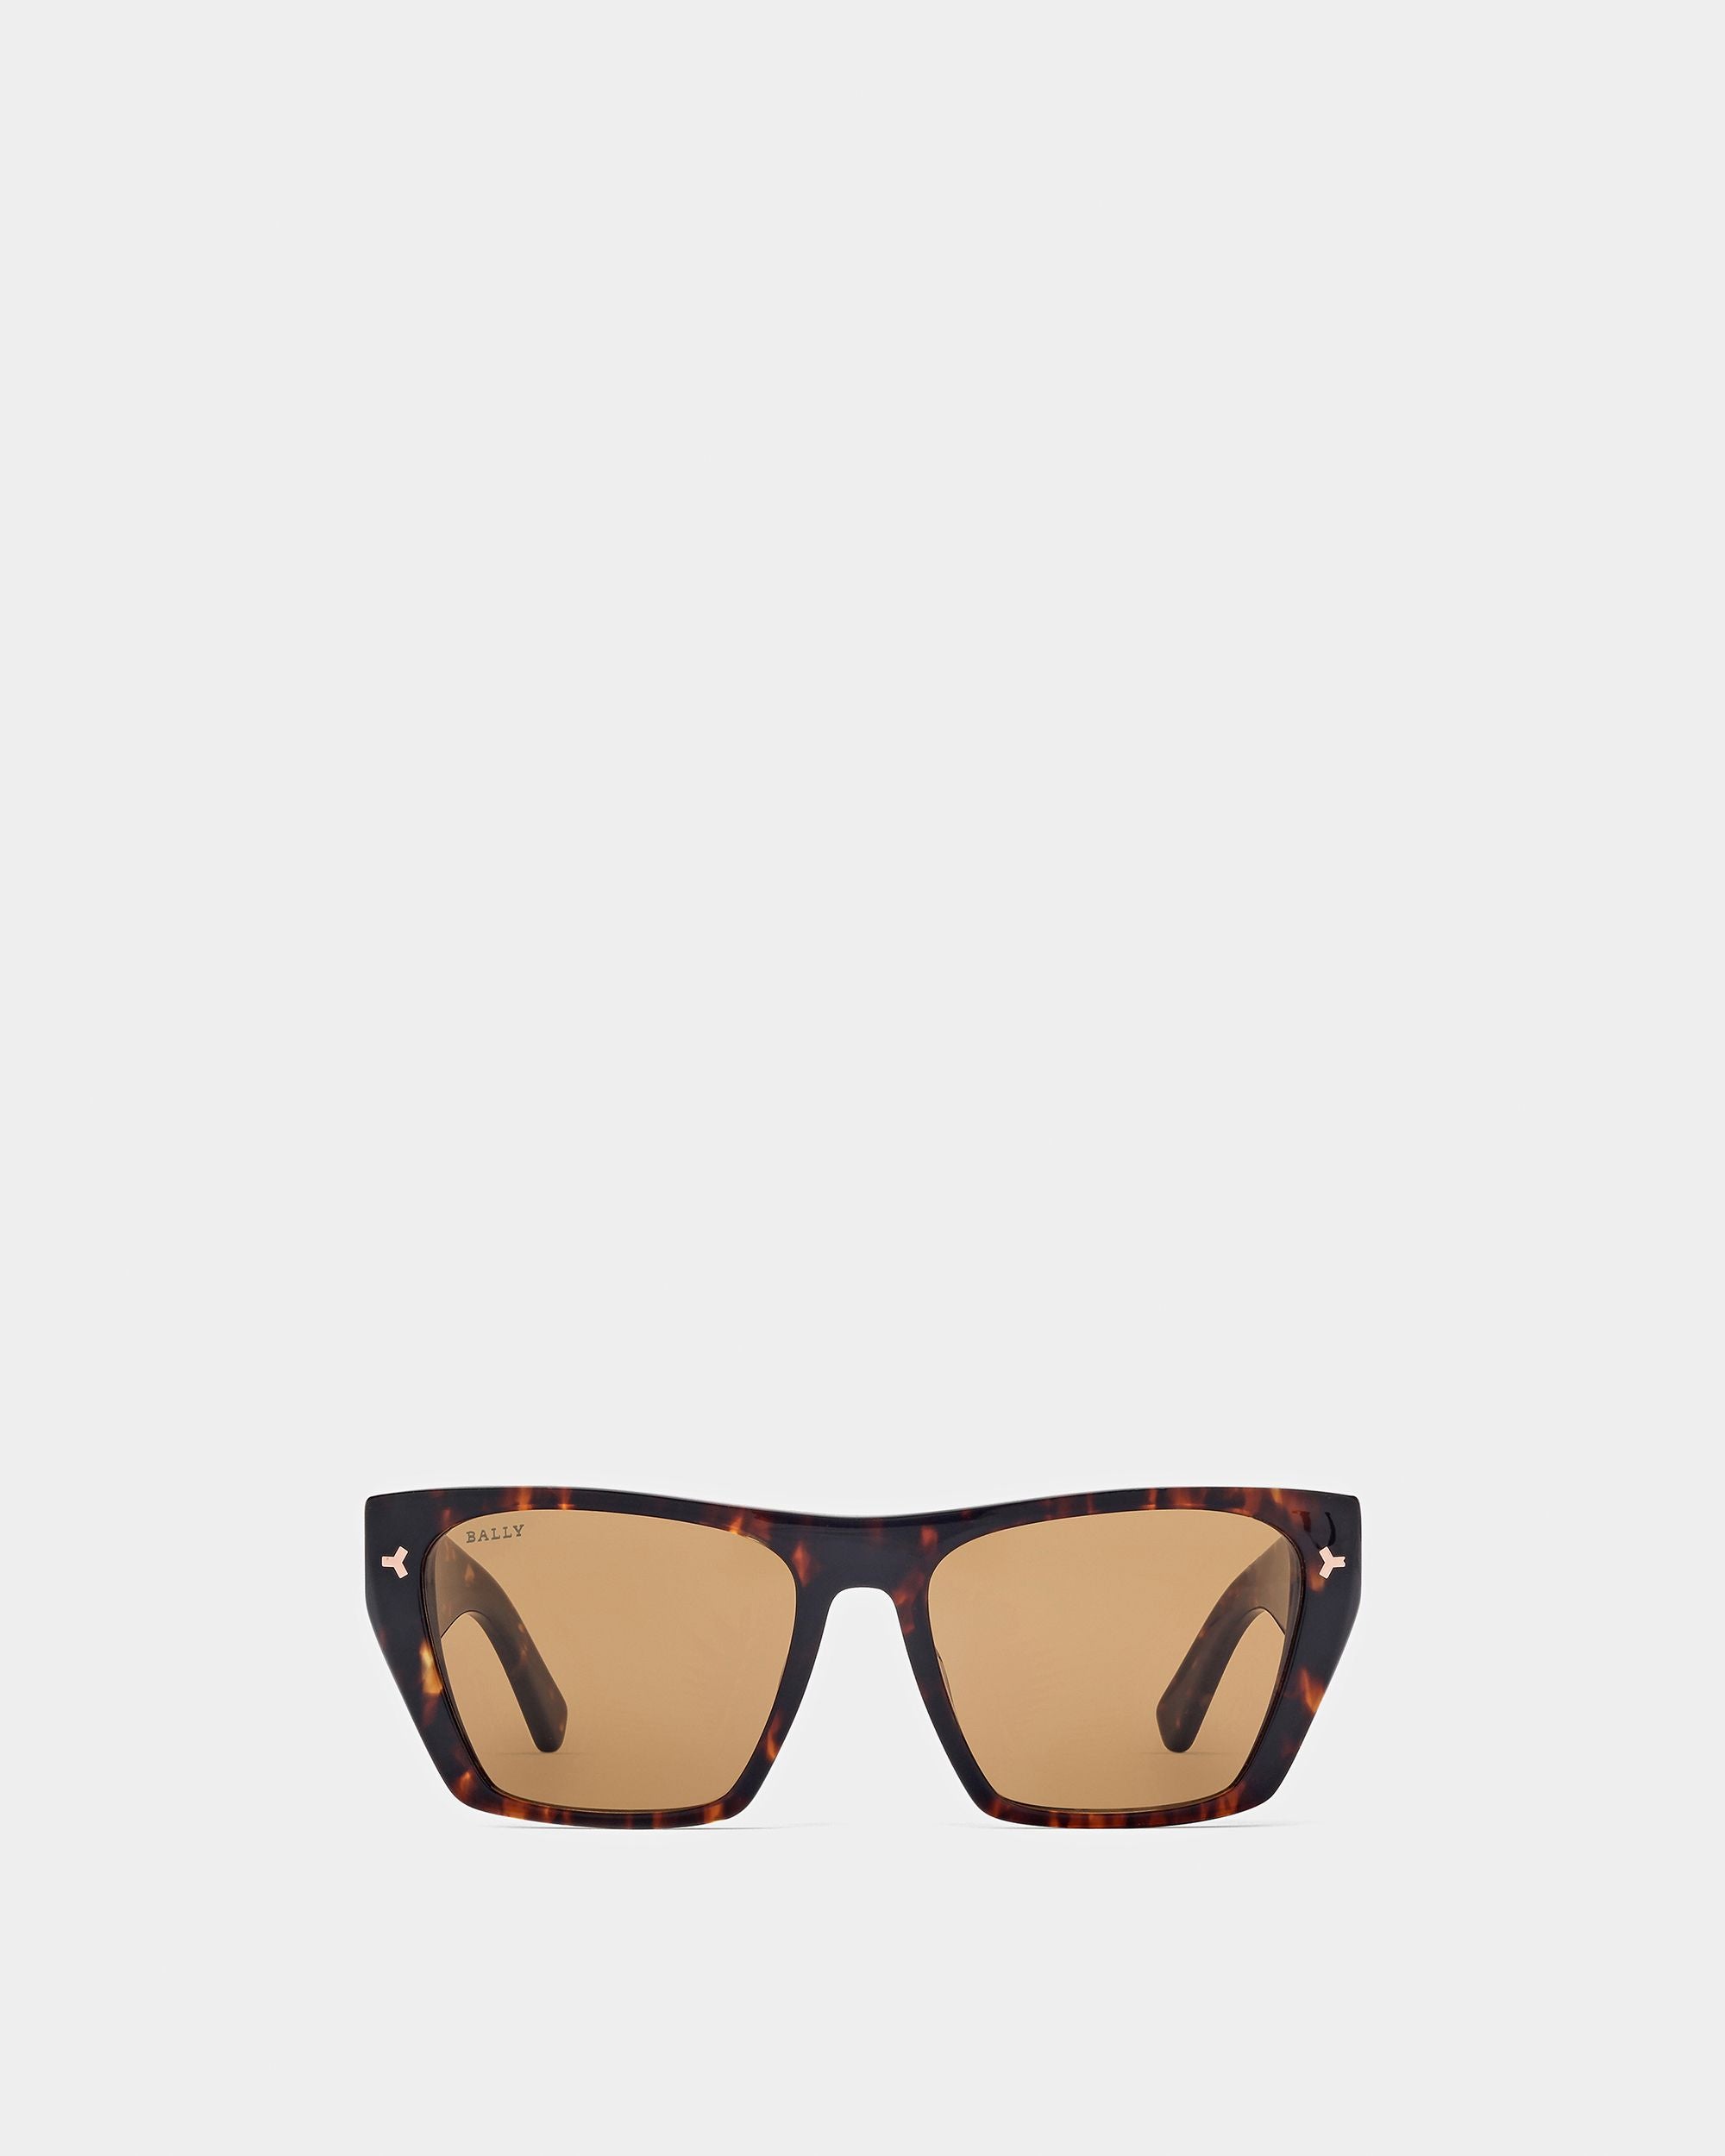 Bally sunglasses BY 0021-H 90E - Contact lenses, sunglasses